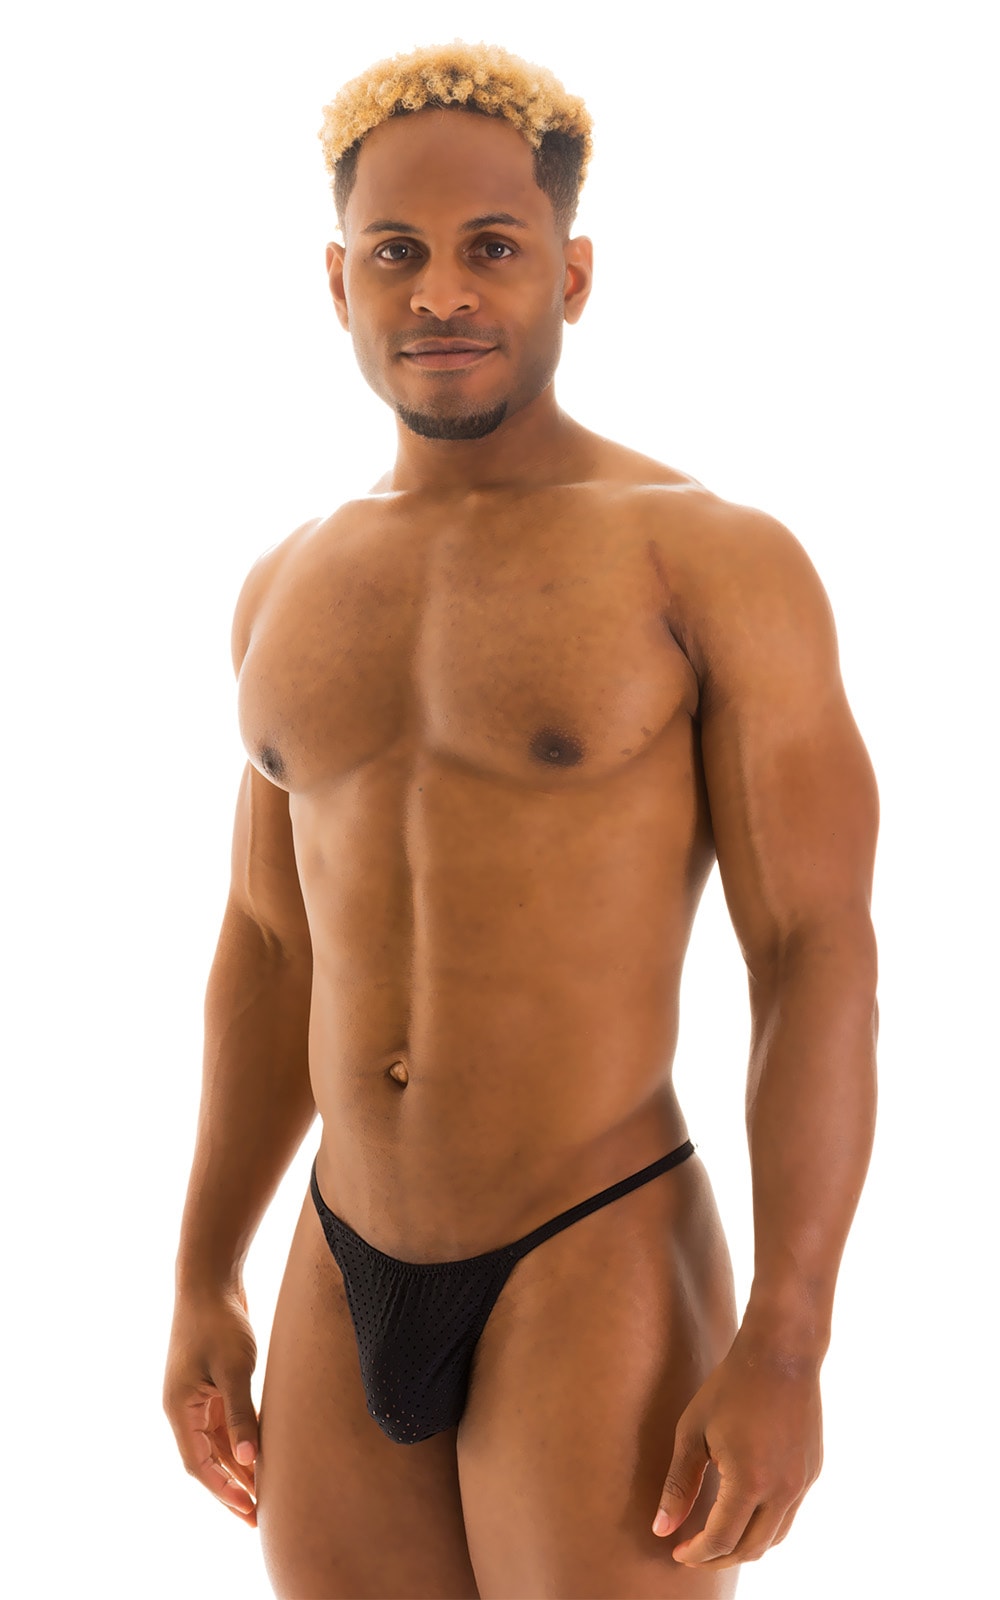 https://skinzwearphotography.com/prodLarge/mens-micro-sheer-black-g-string-thong-swimsuit-bikini-M31-2556-F2.jpg